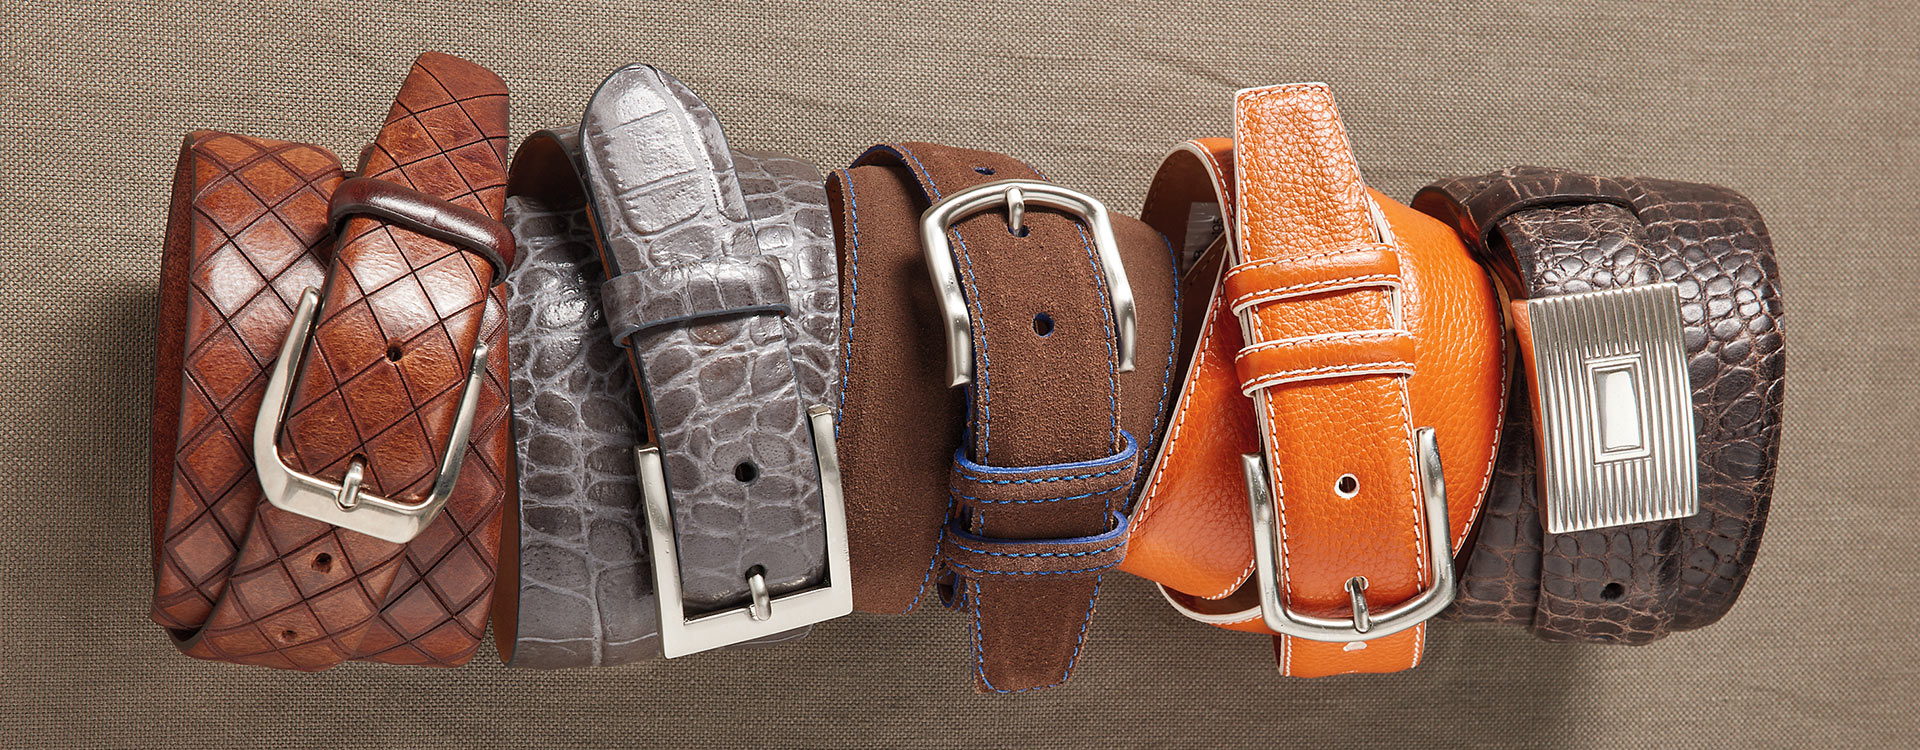 Designer Buckle Men Belts Genuine Leather Fashion Luxury Gift